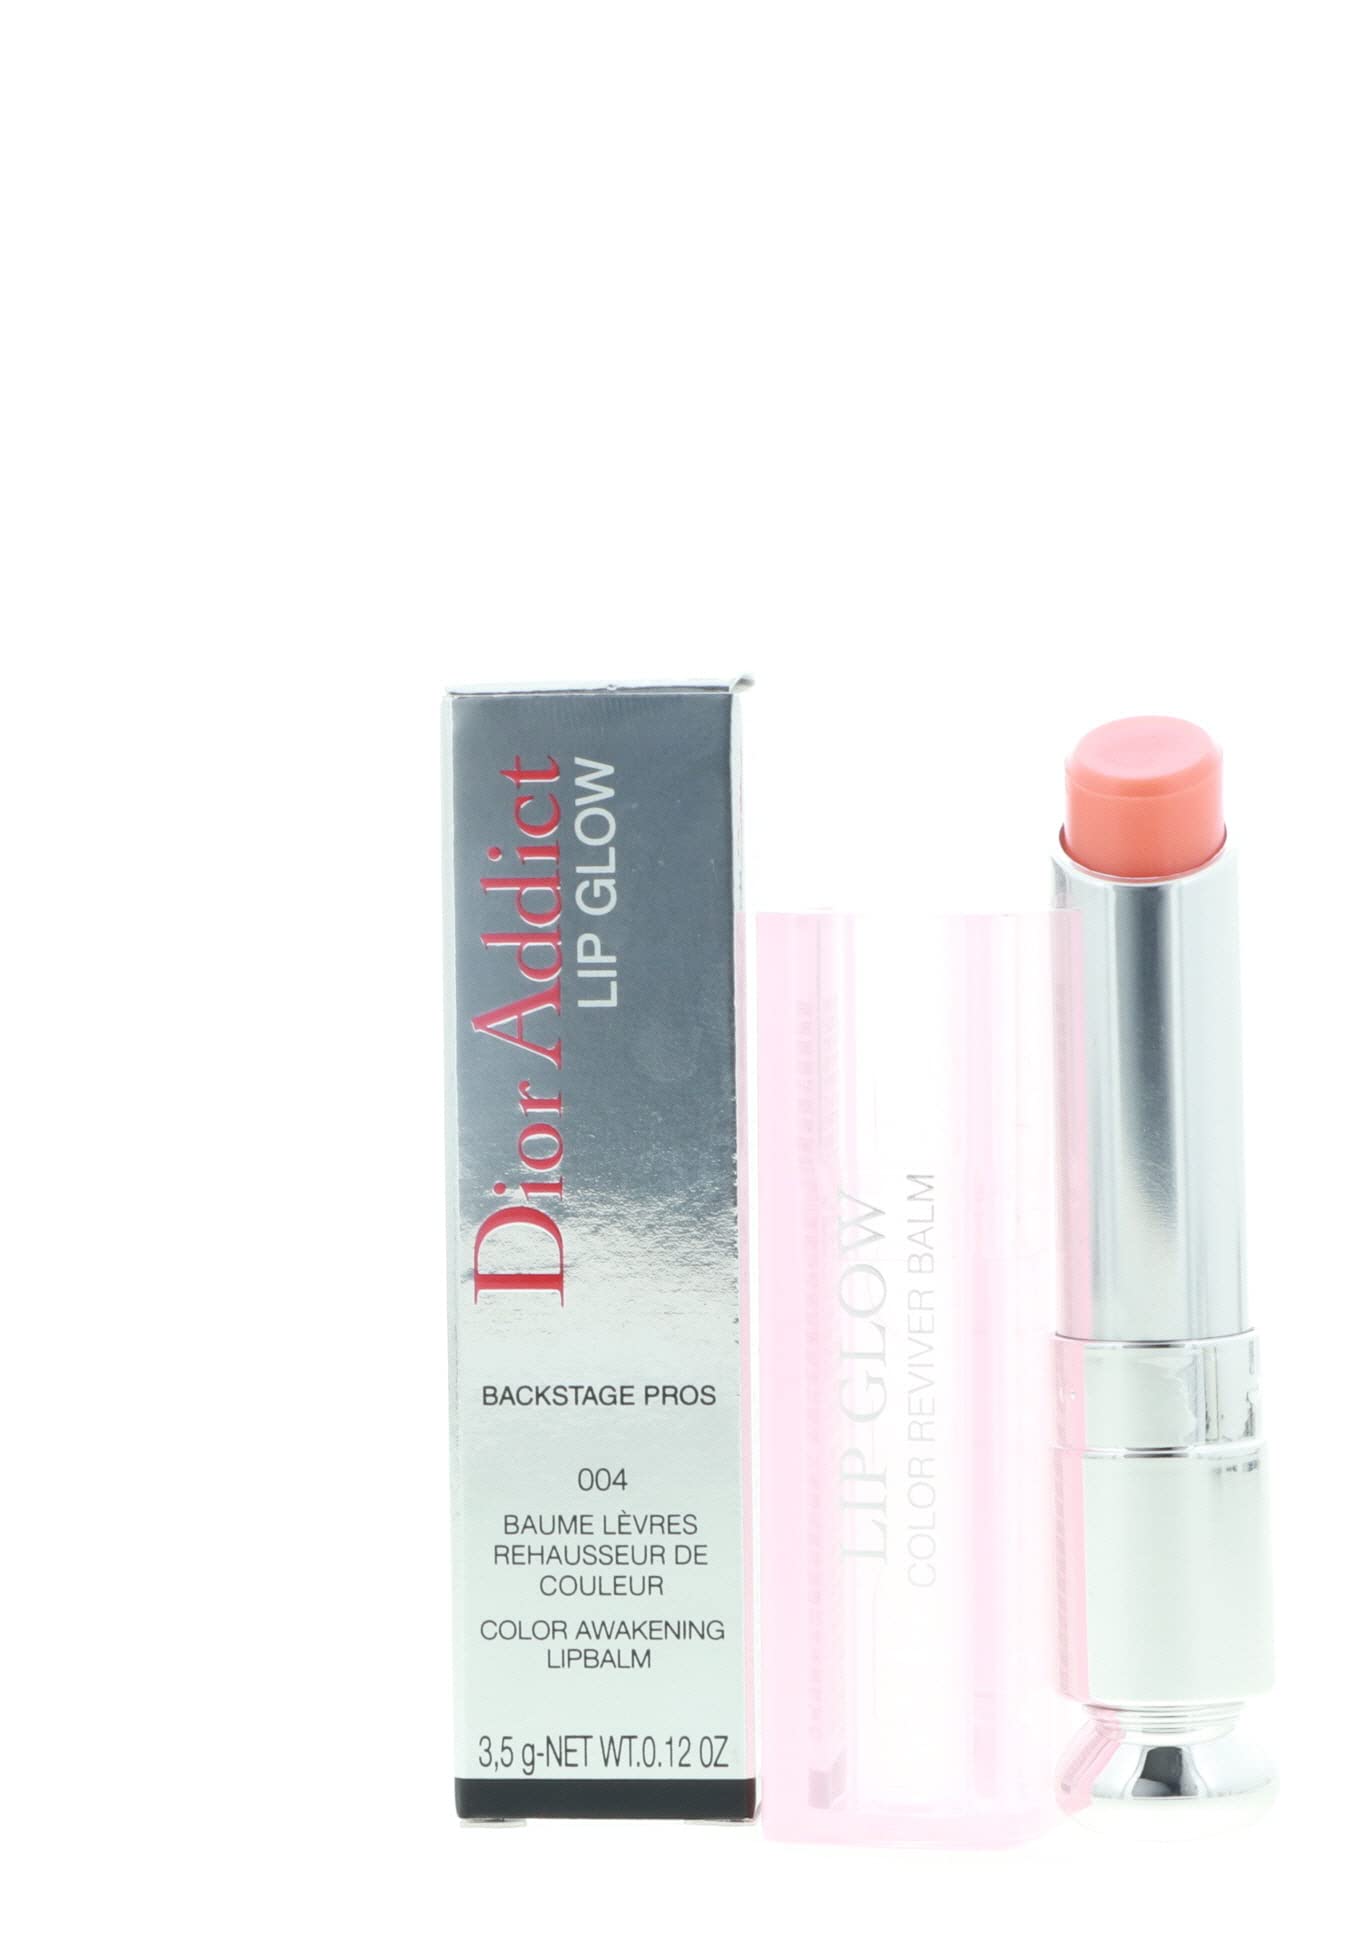 Set son dưỡng môi Dior Addict Lip Glow 001 Pink  004 Coral Honestmart